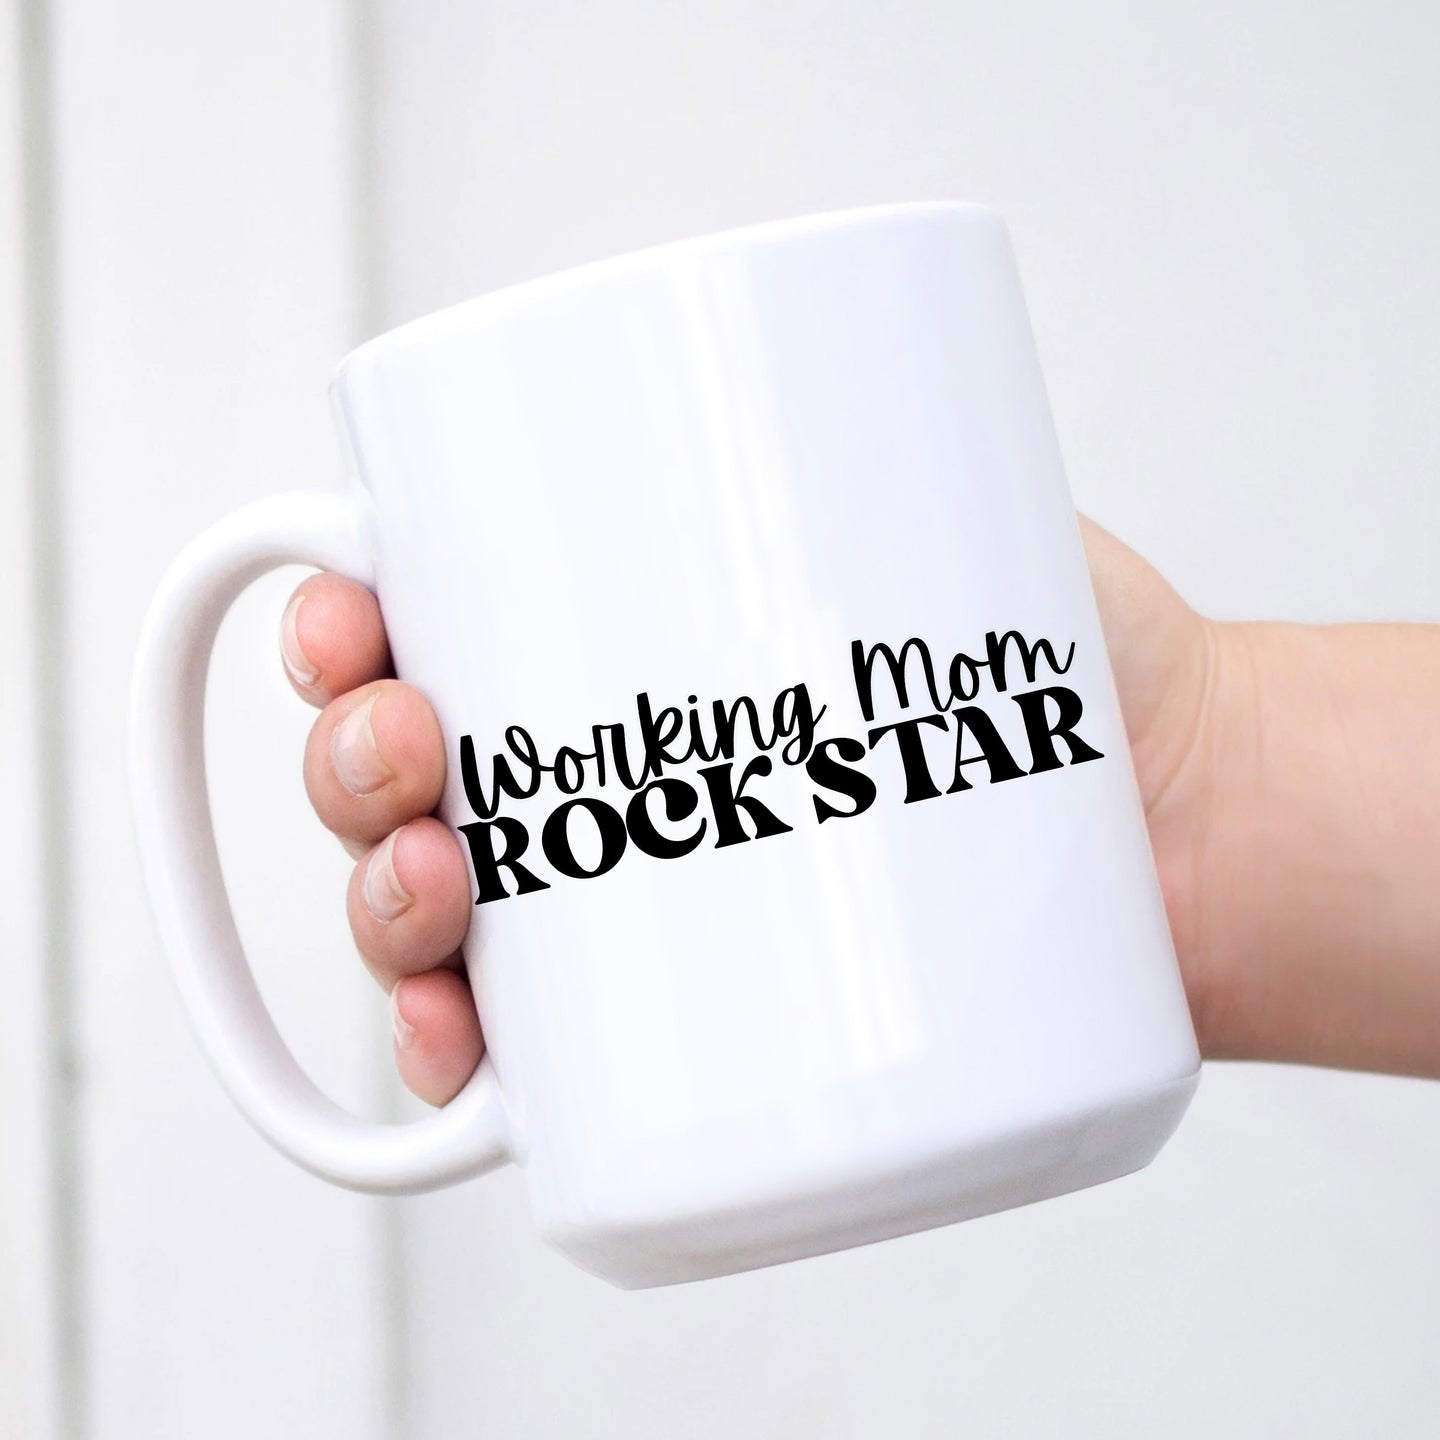 Working Mom Rockstar Coffee Mugs